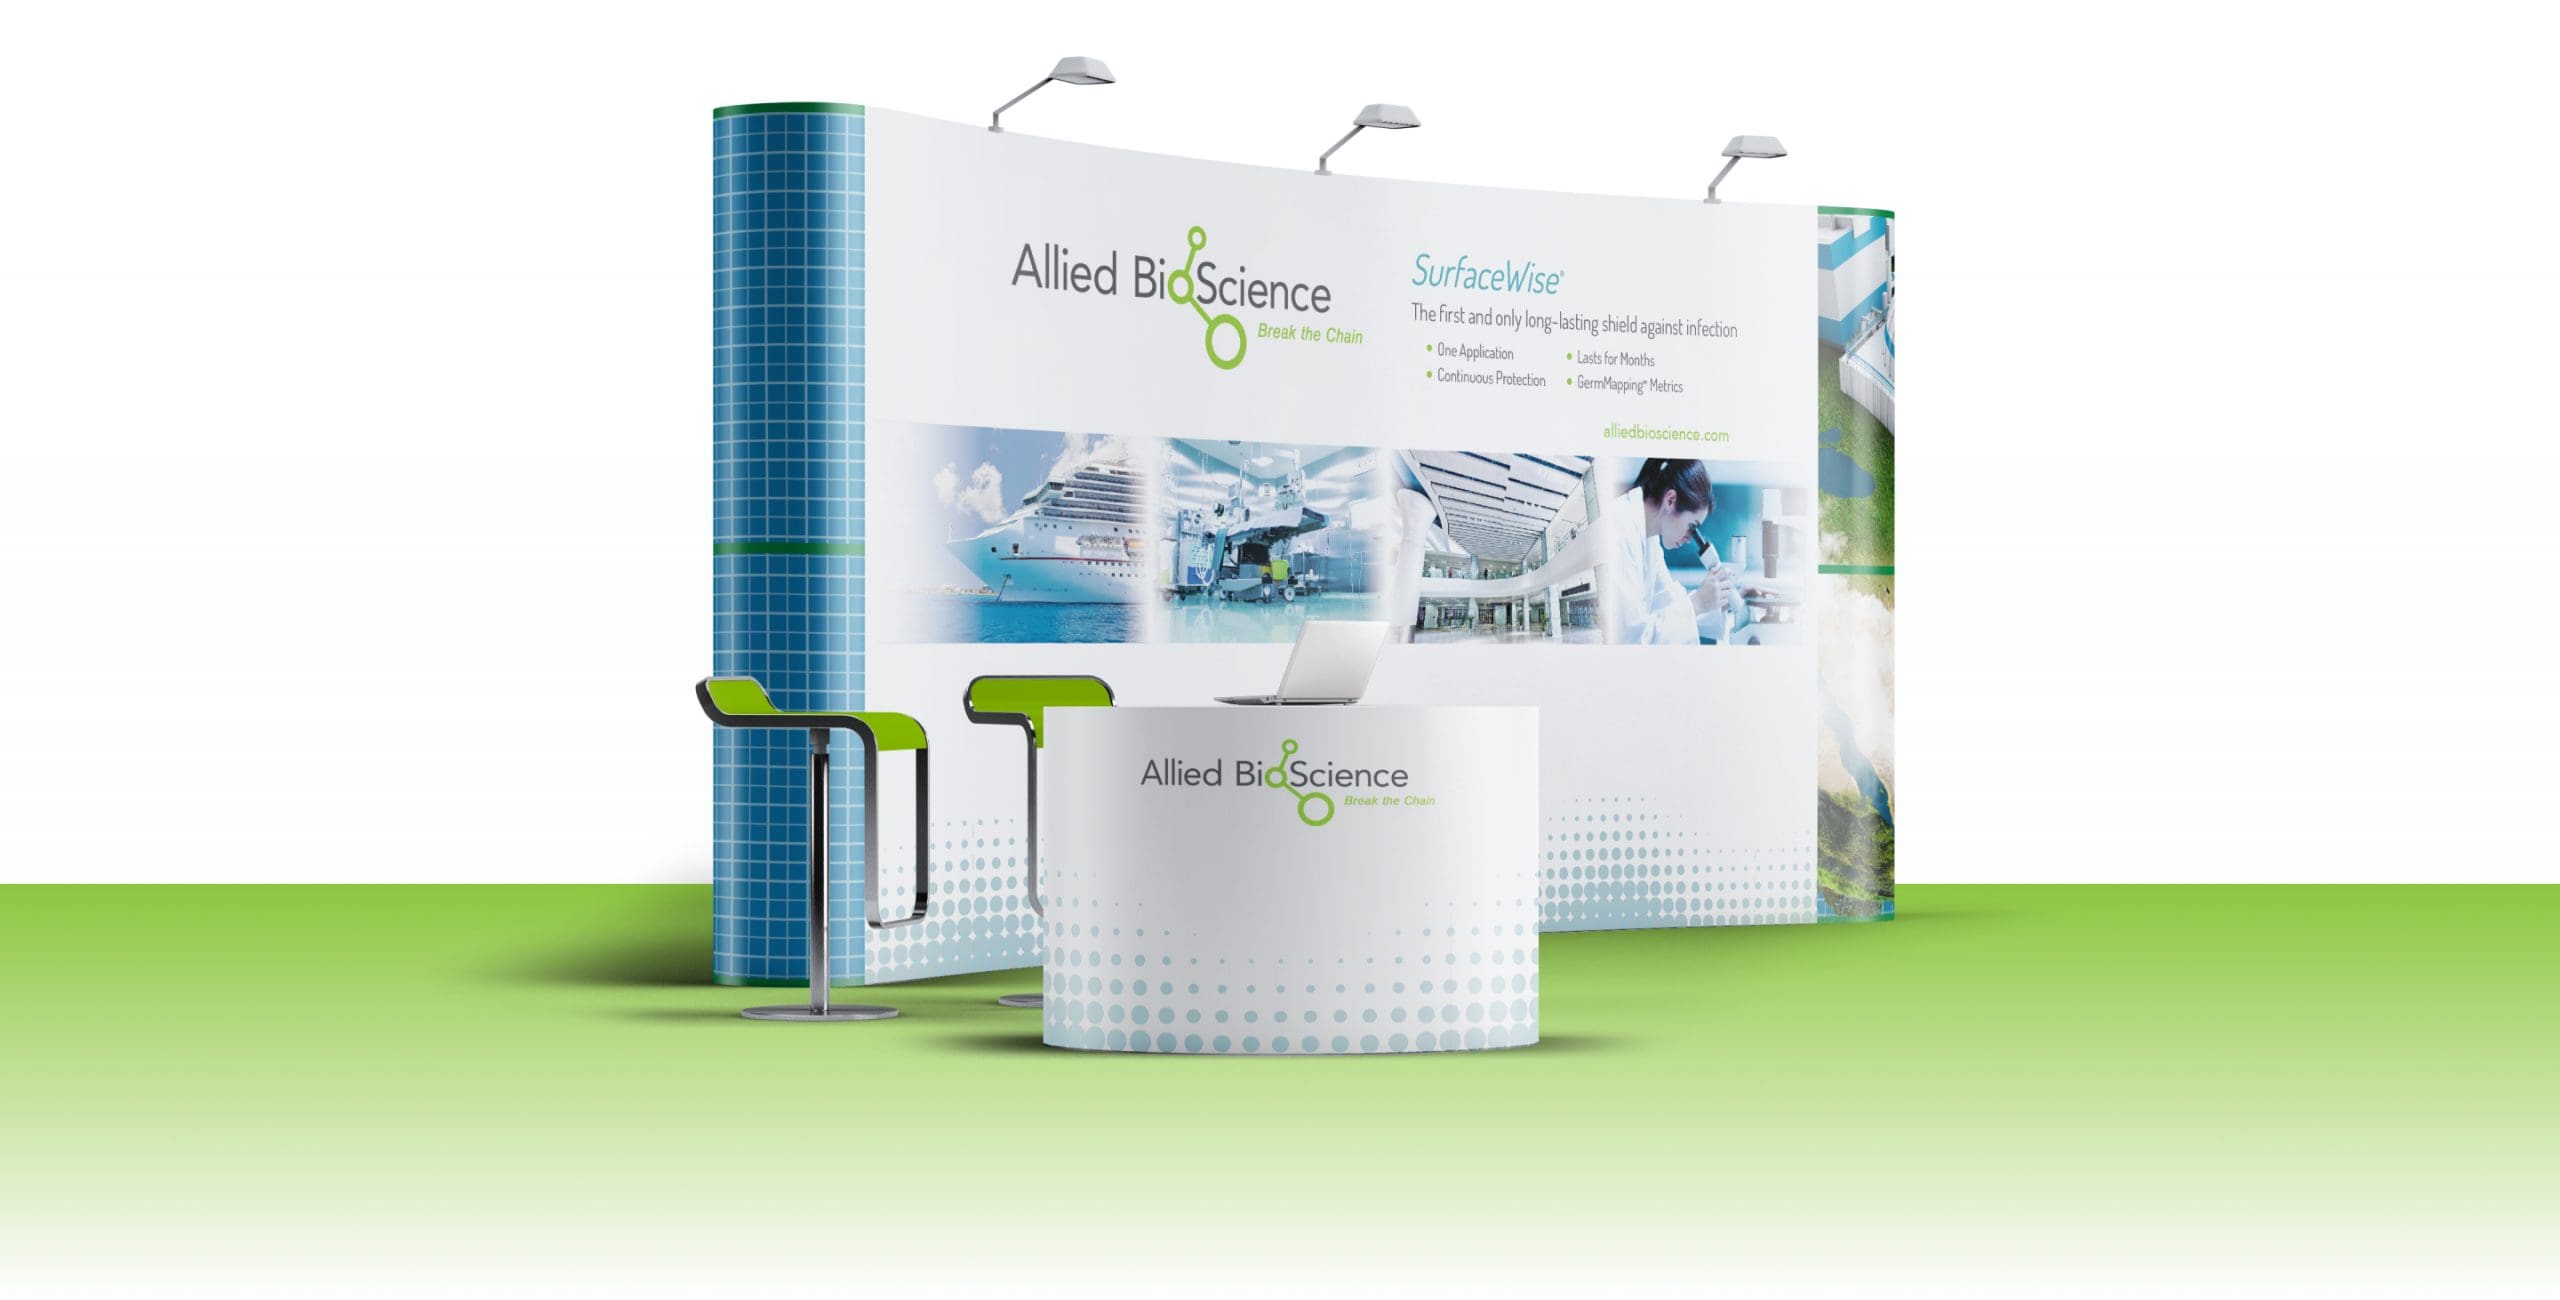 Allied BioScience tradeshow booth